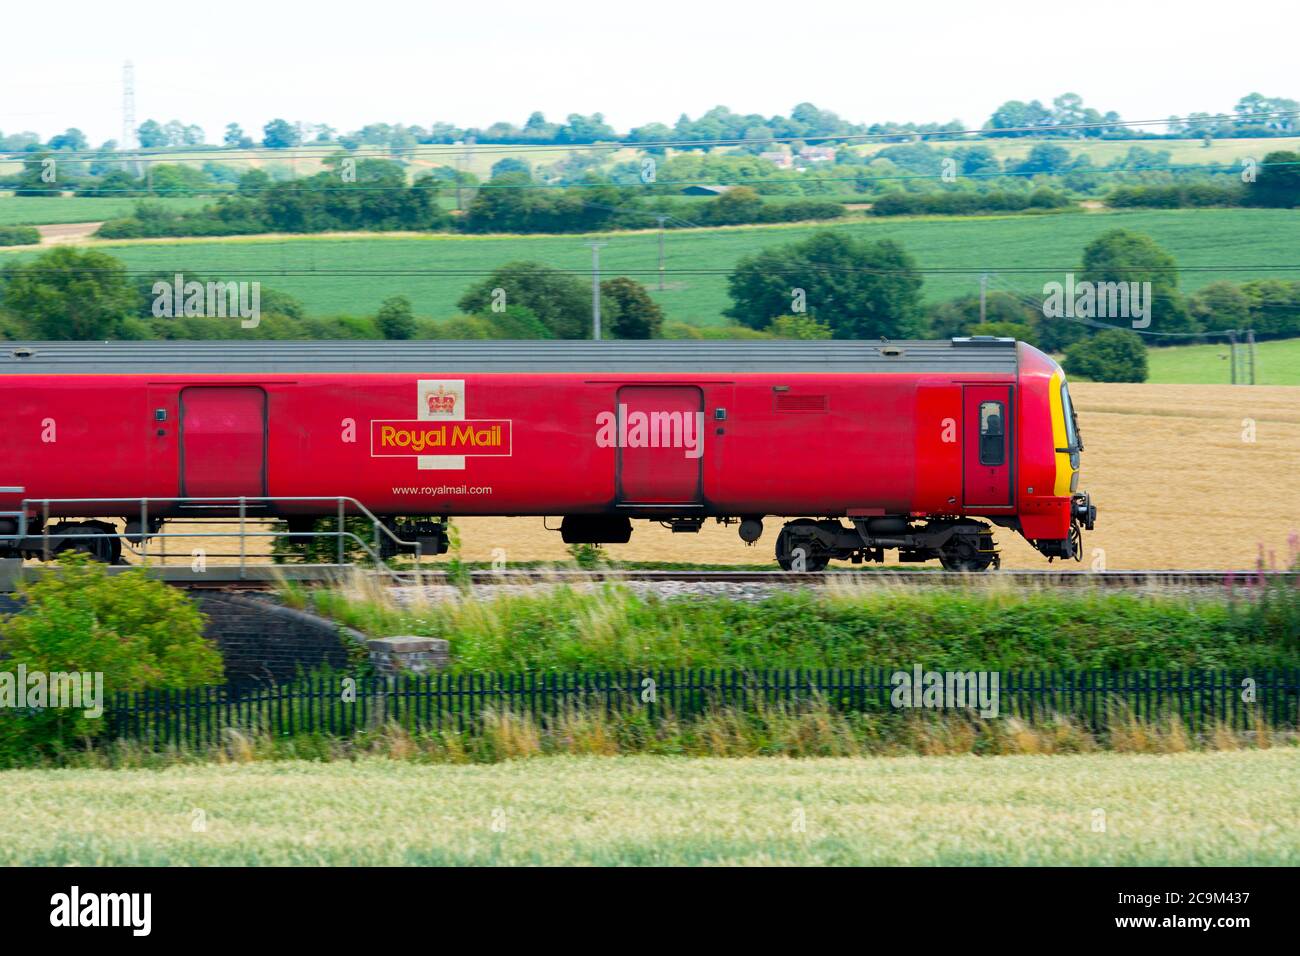 Royal Mail electric multiple unit train on the West Coast Main Line, Northamptonshire, UK Stock Photo